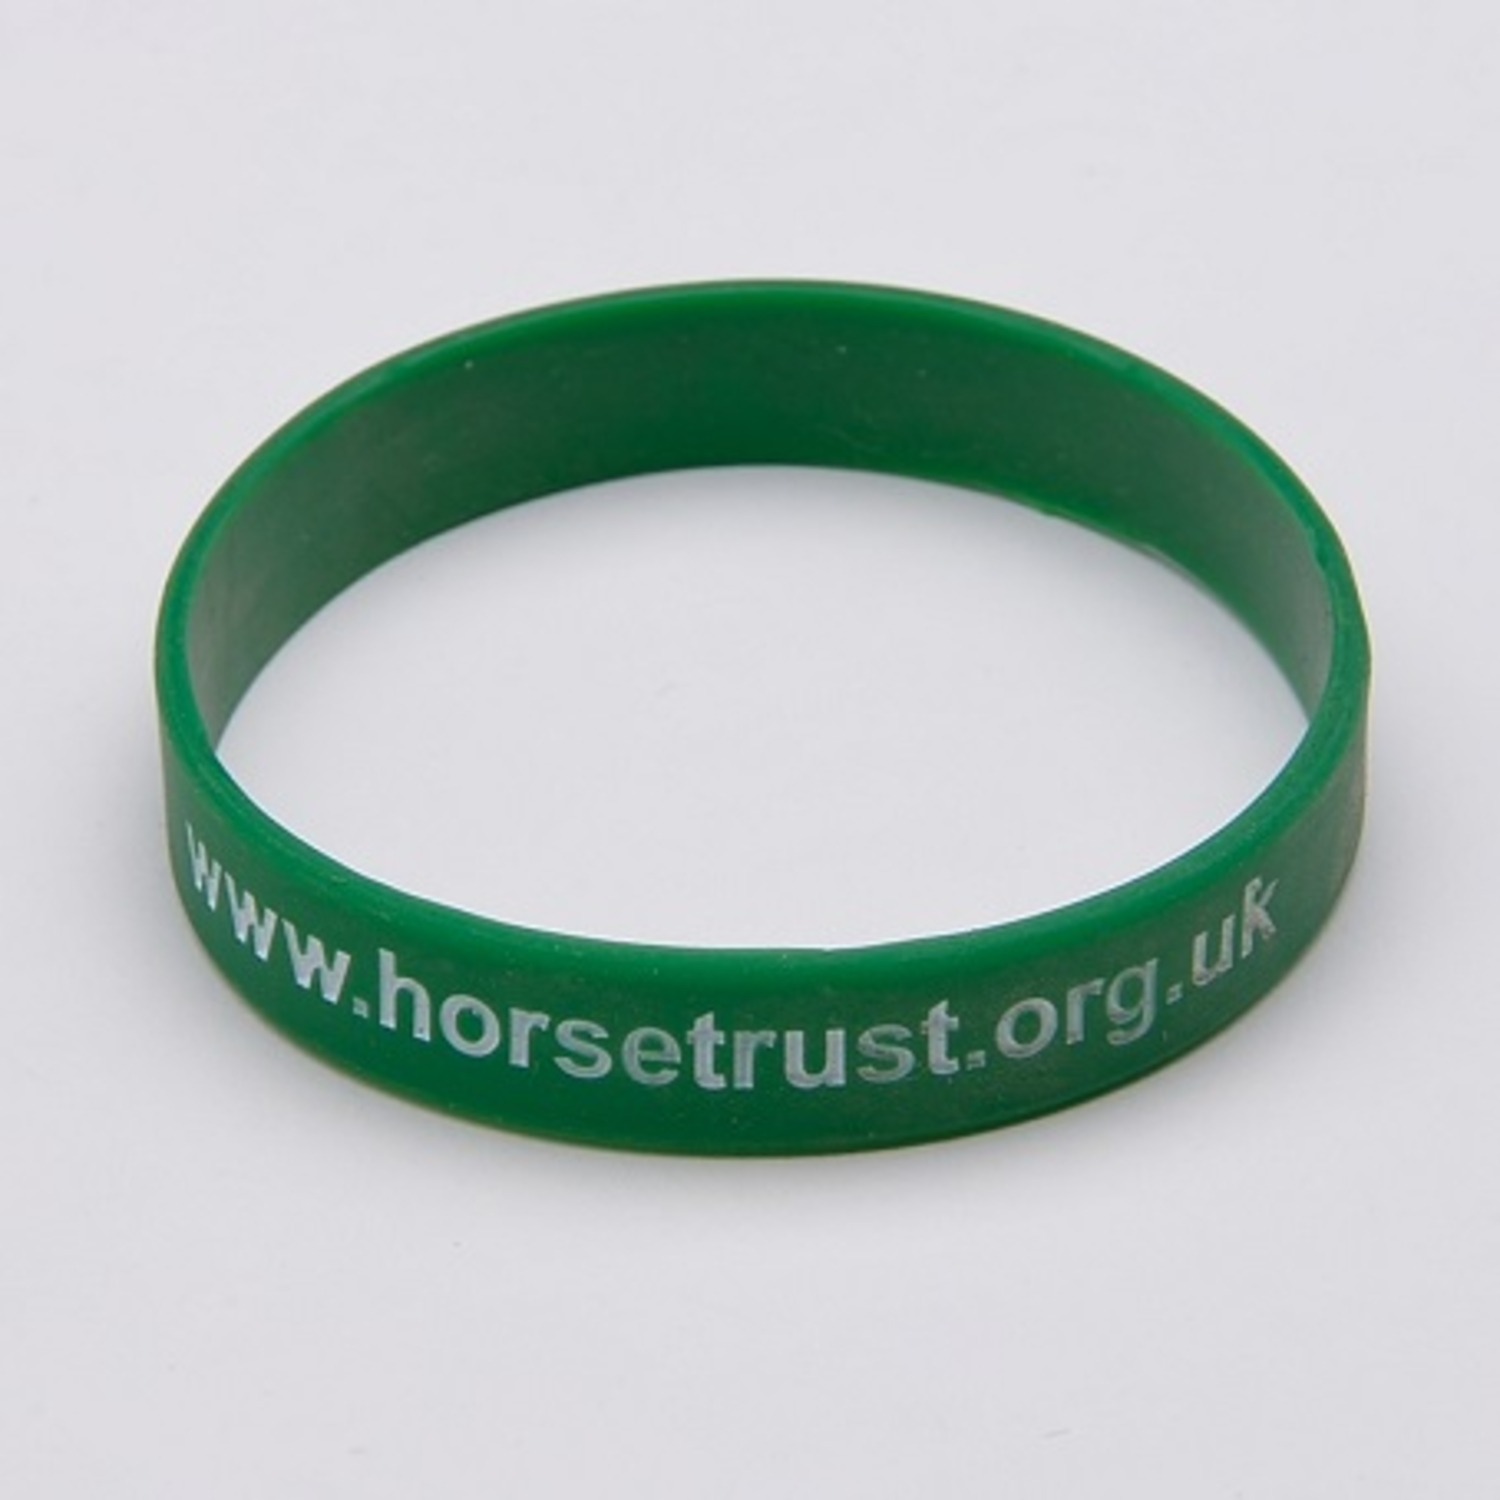 The Horse Trust Wristband